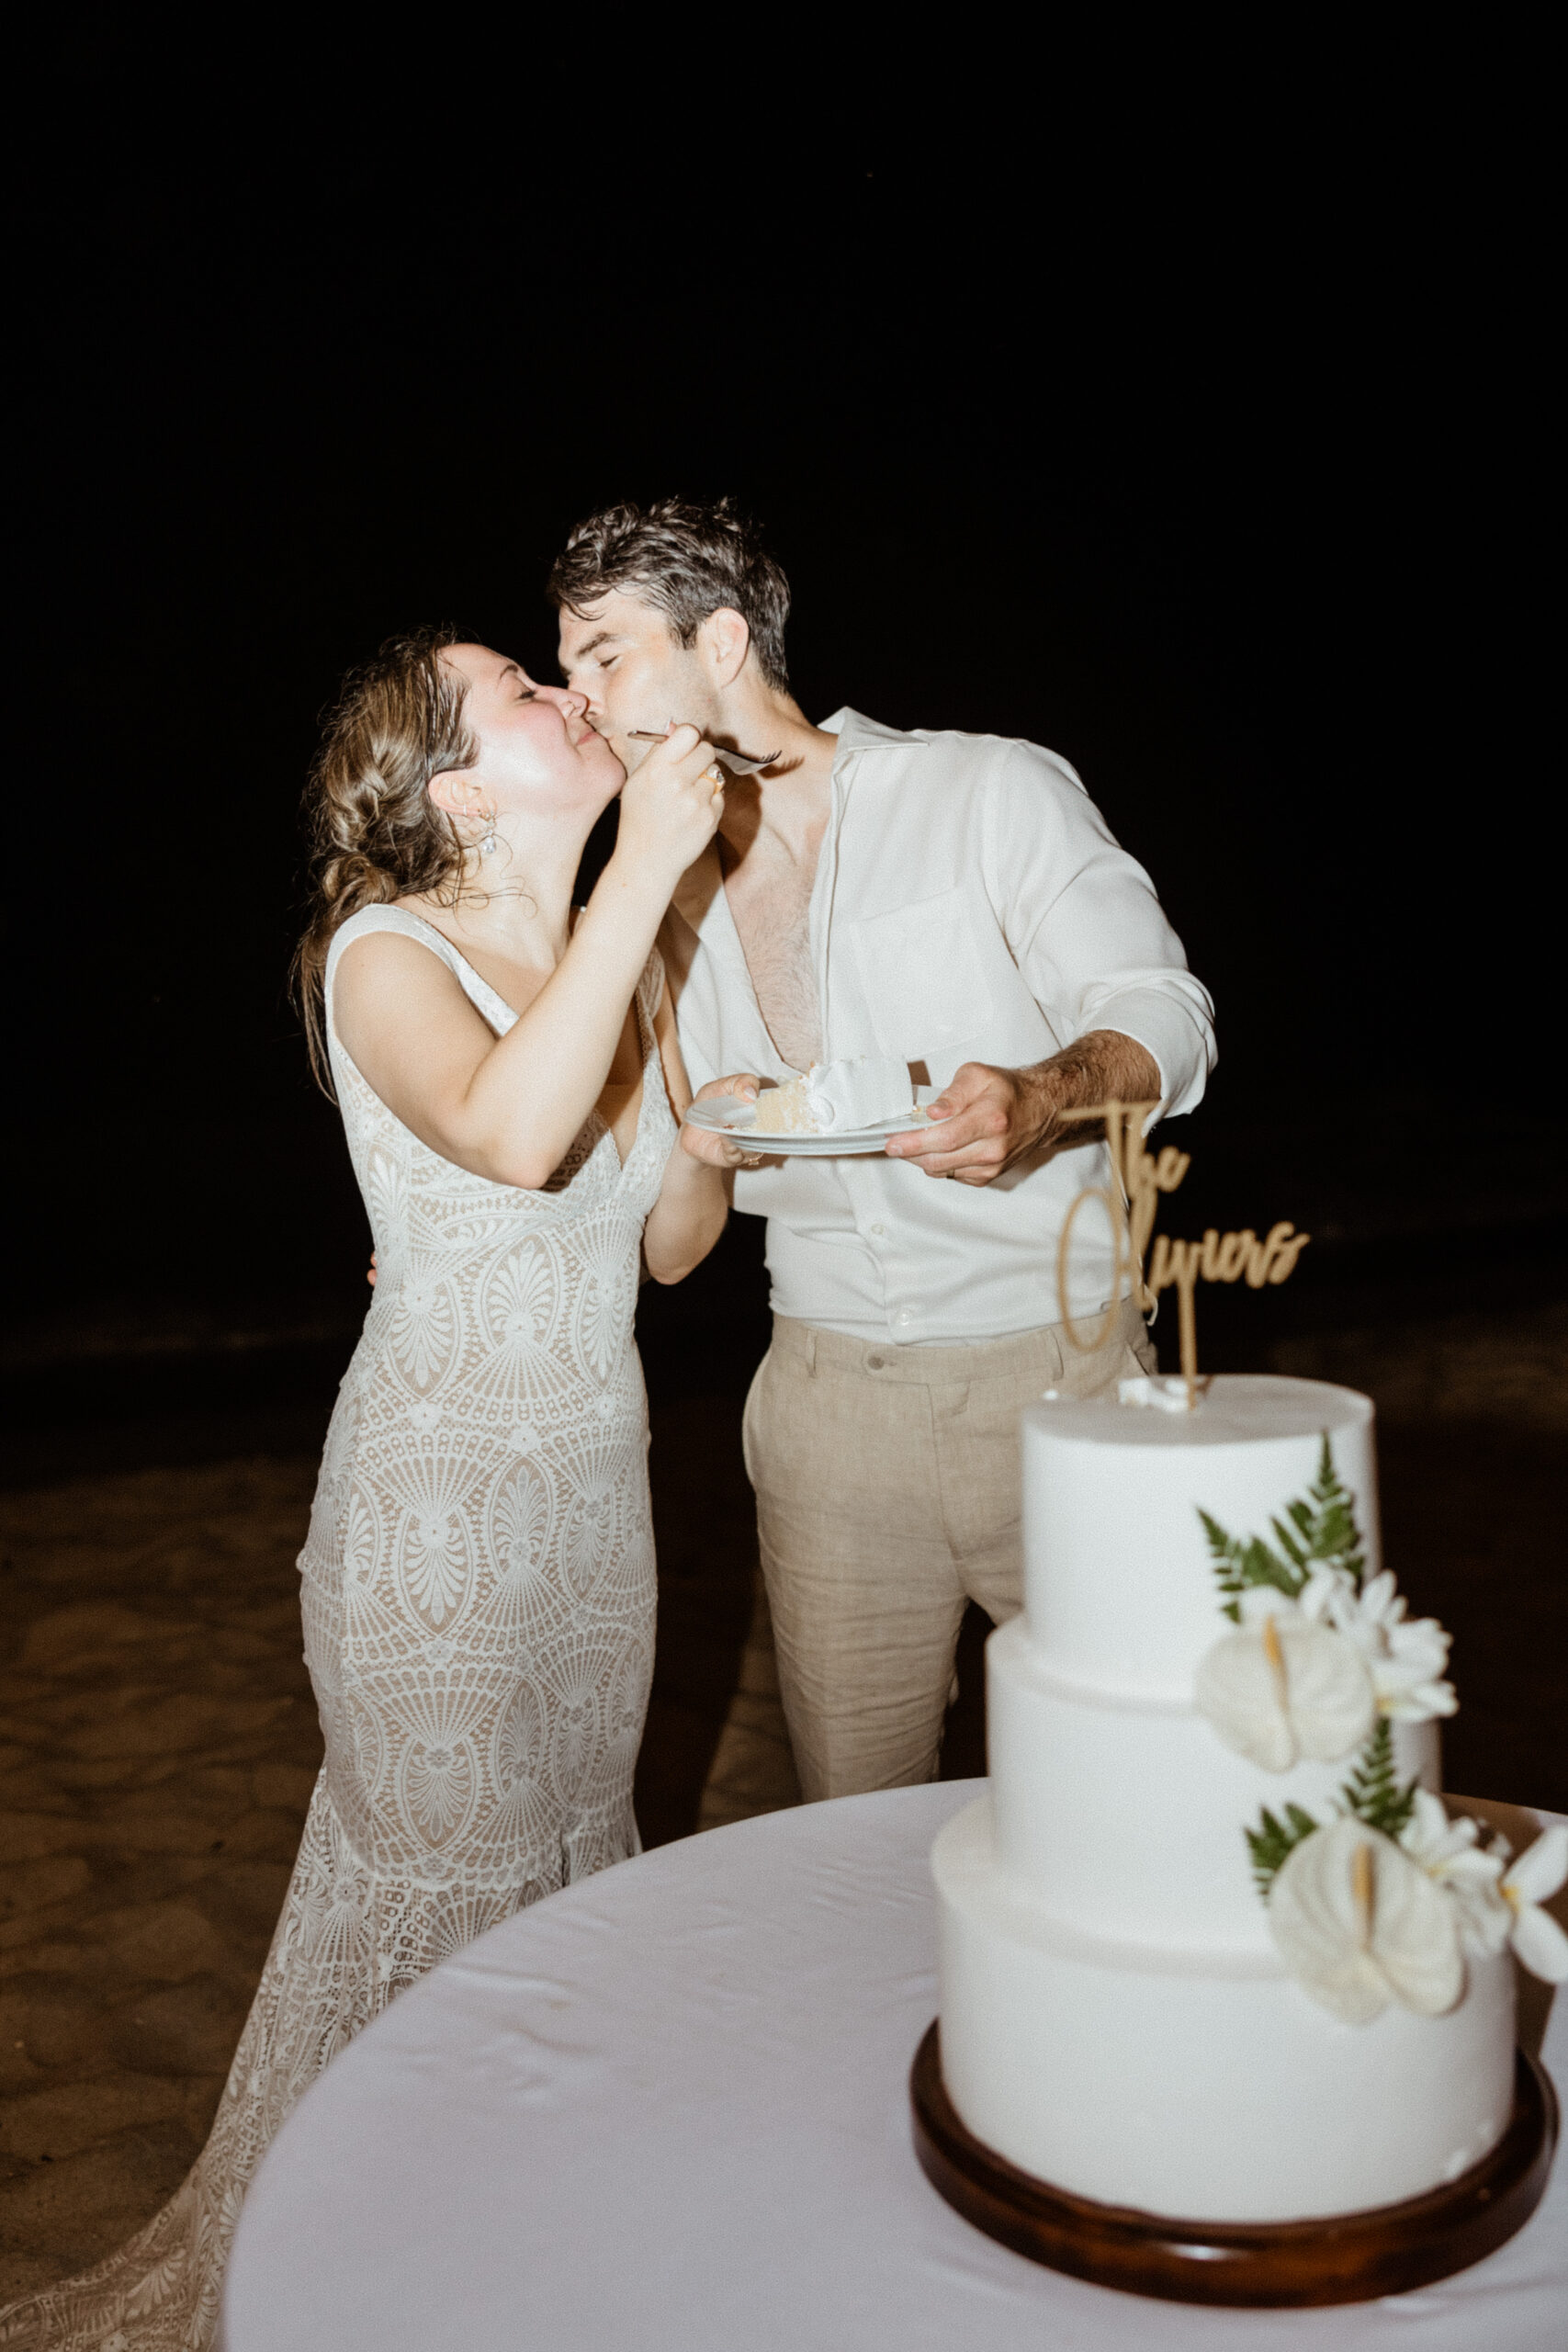 bride and groom eating wedding cake together.